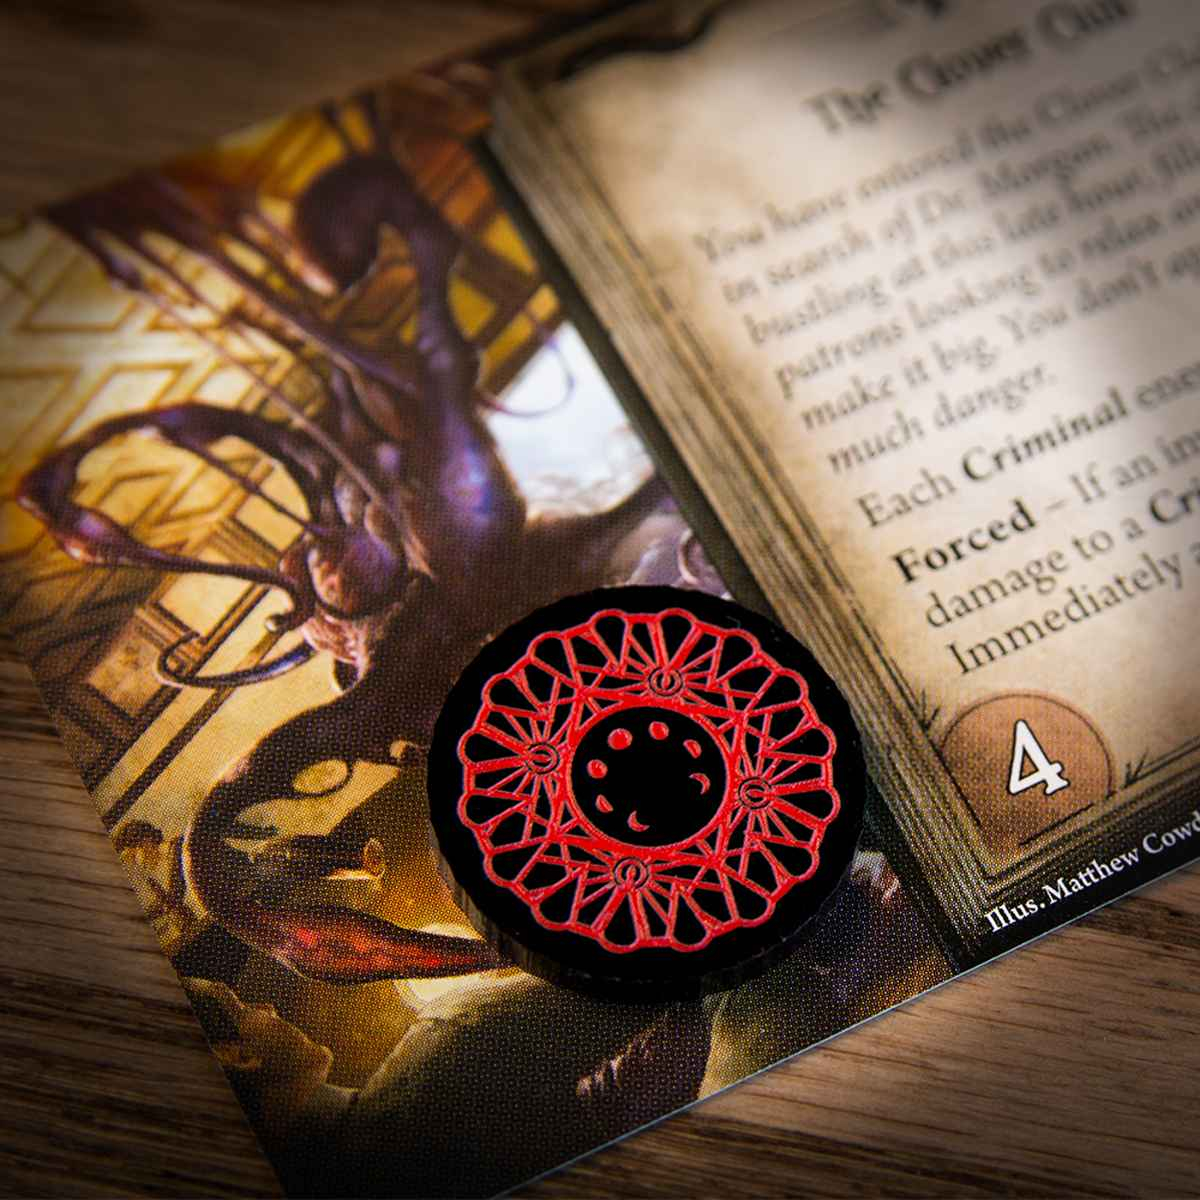 A one-value Doom Token on top of an Arkham Horror LCG Agenda Card